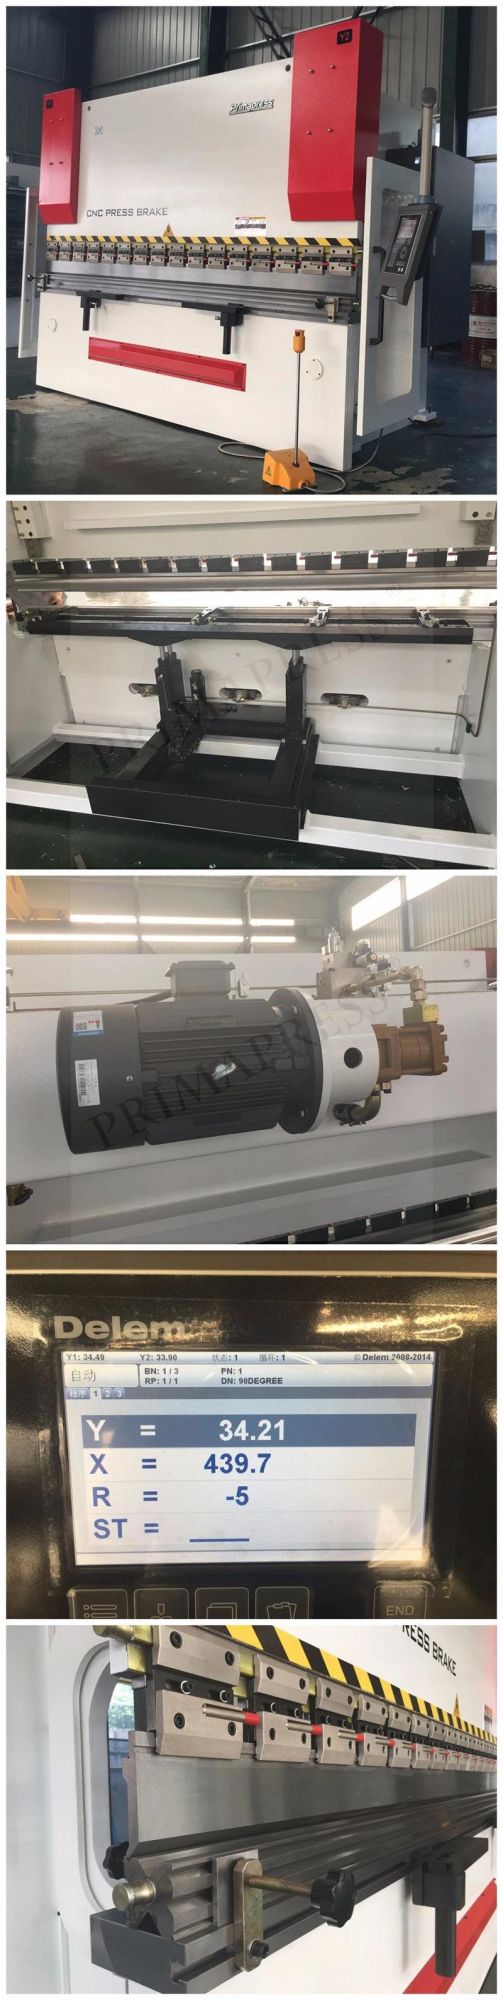 Nanjing Primapress Wc 67 400/5000 Hydraulic Press Brake Metal Machine E21 System Contorller